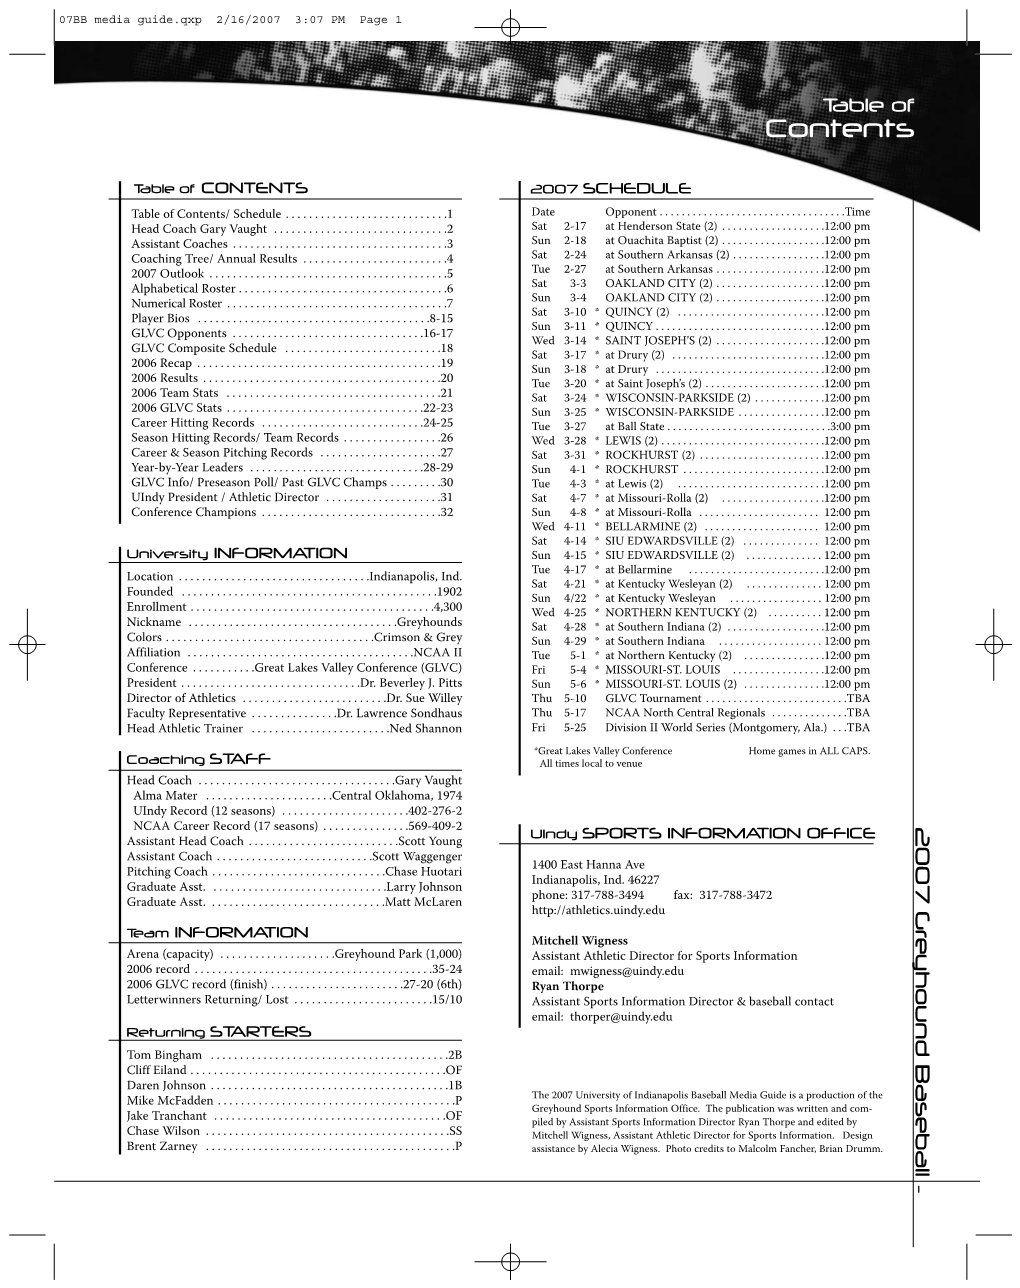 07BB Media Guide.Qxp 2/16/2007 3:07 PM Page 1 Page PM 3:07 2/16/2007 Guide.Qxp Media 07BB 07BB Mediaguide.Qxp2/16/20073:07Pmpage2 4 2